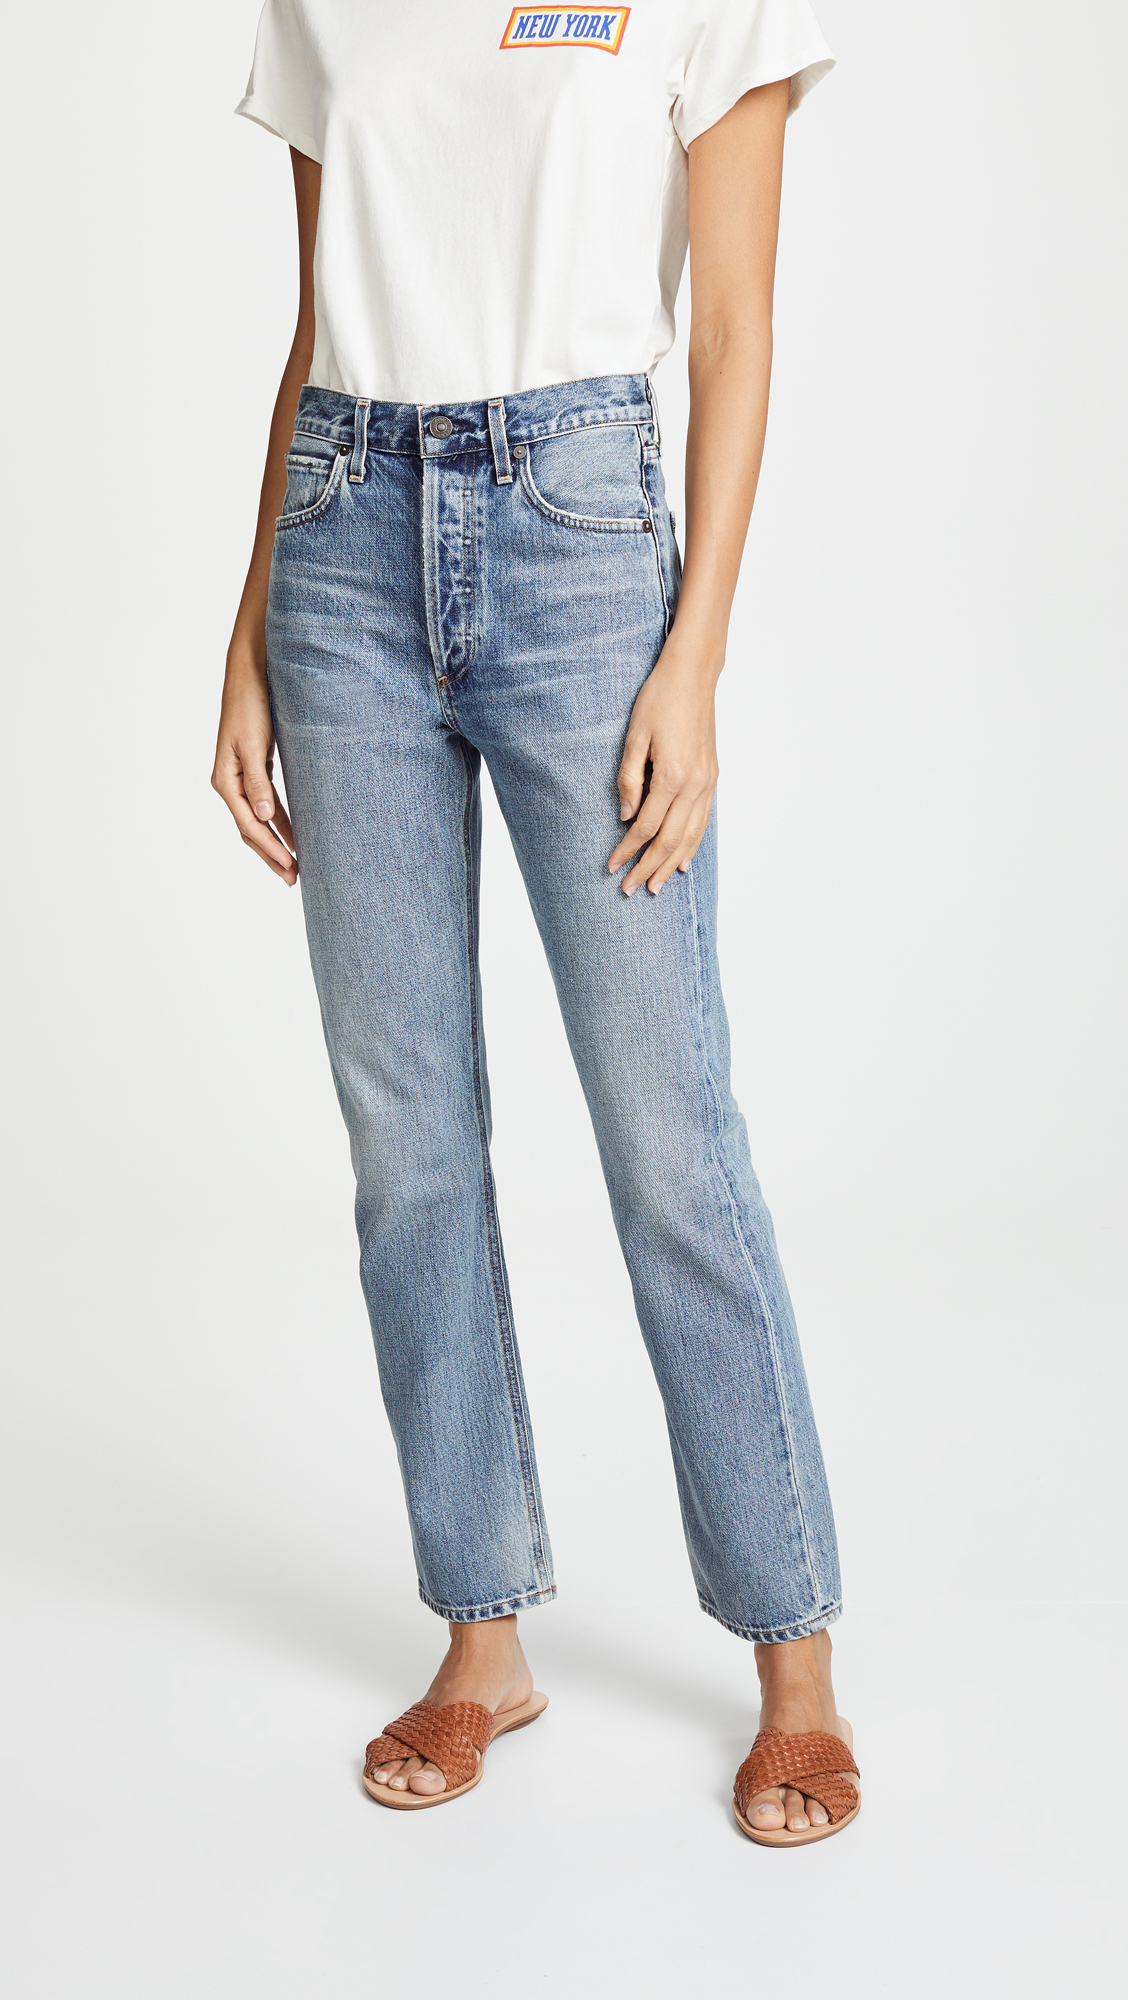 jeans for summer women's